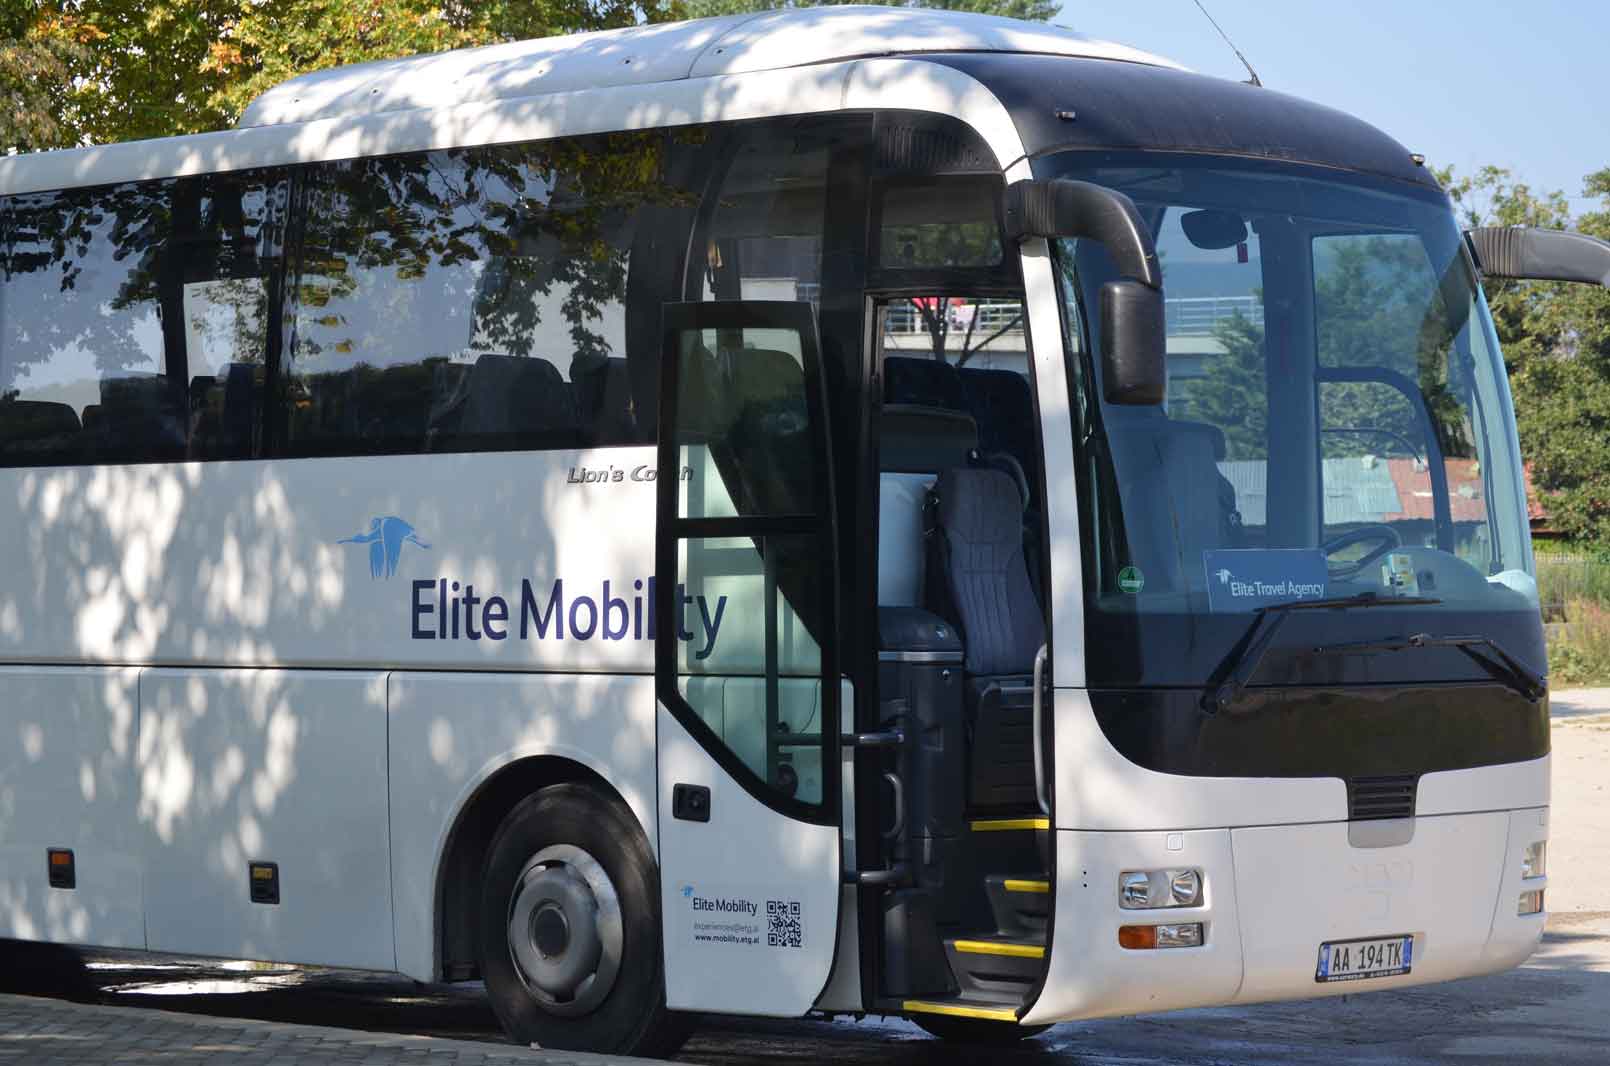 Elite Travel Agency bus